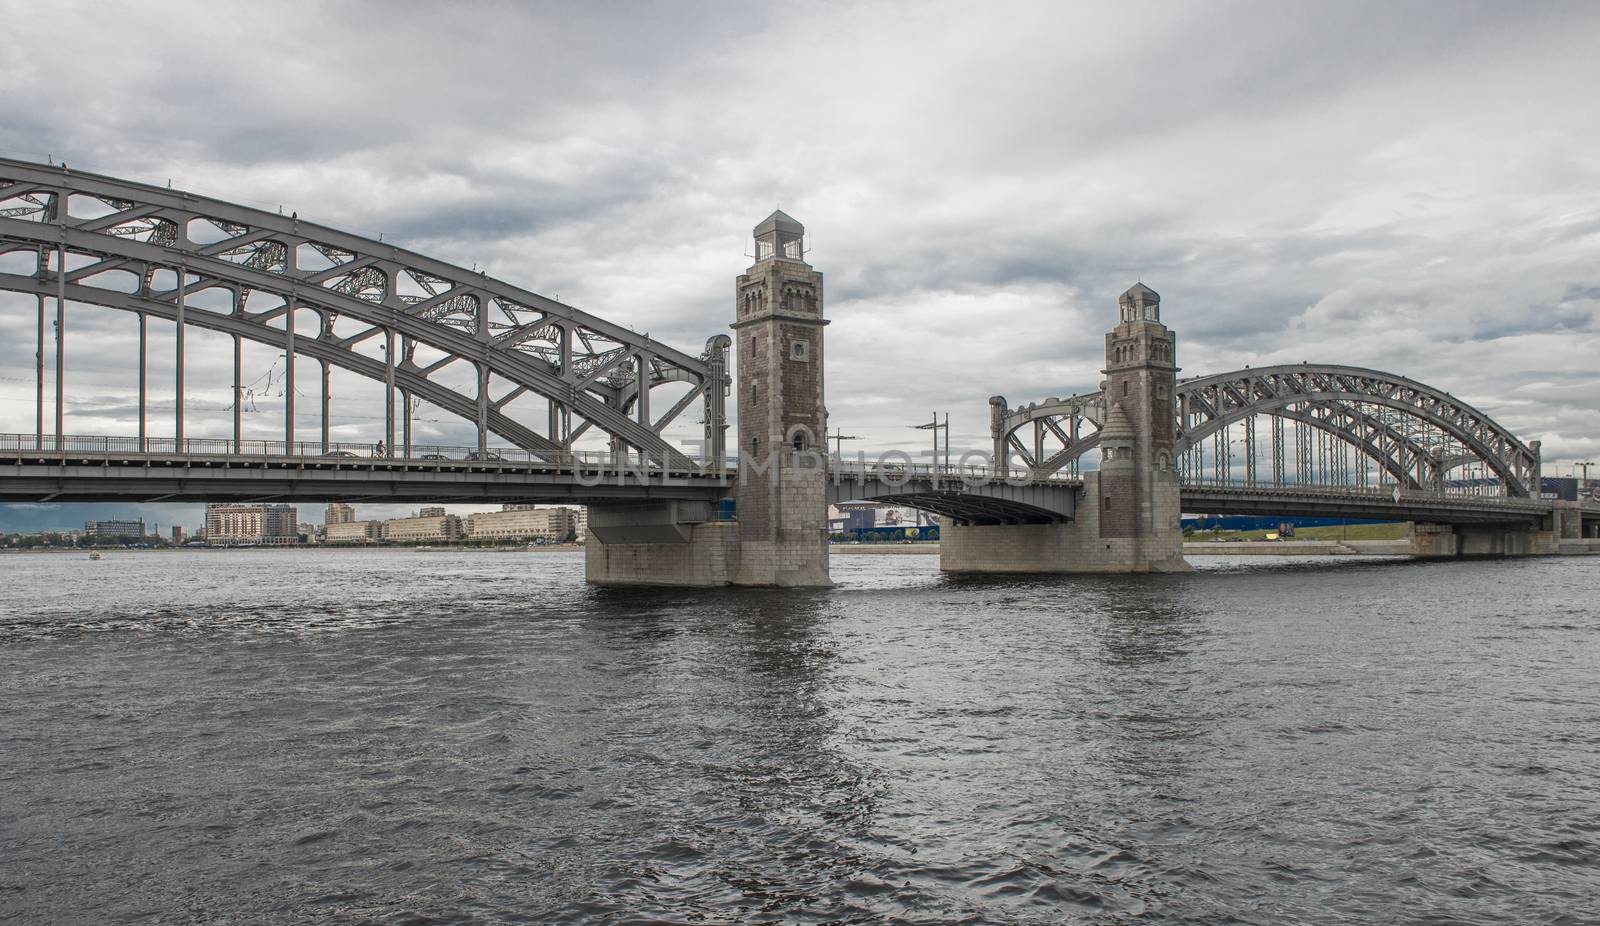 Bolsheokhtinsky Bridge in Sankt Petersburg by Alenmax